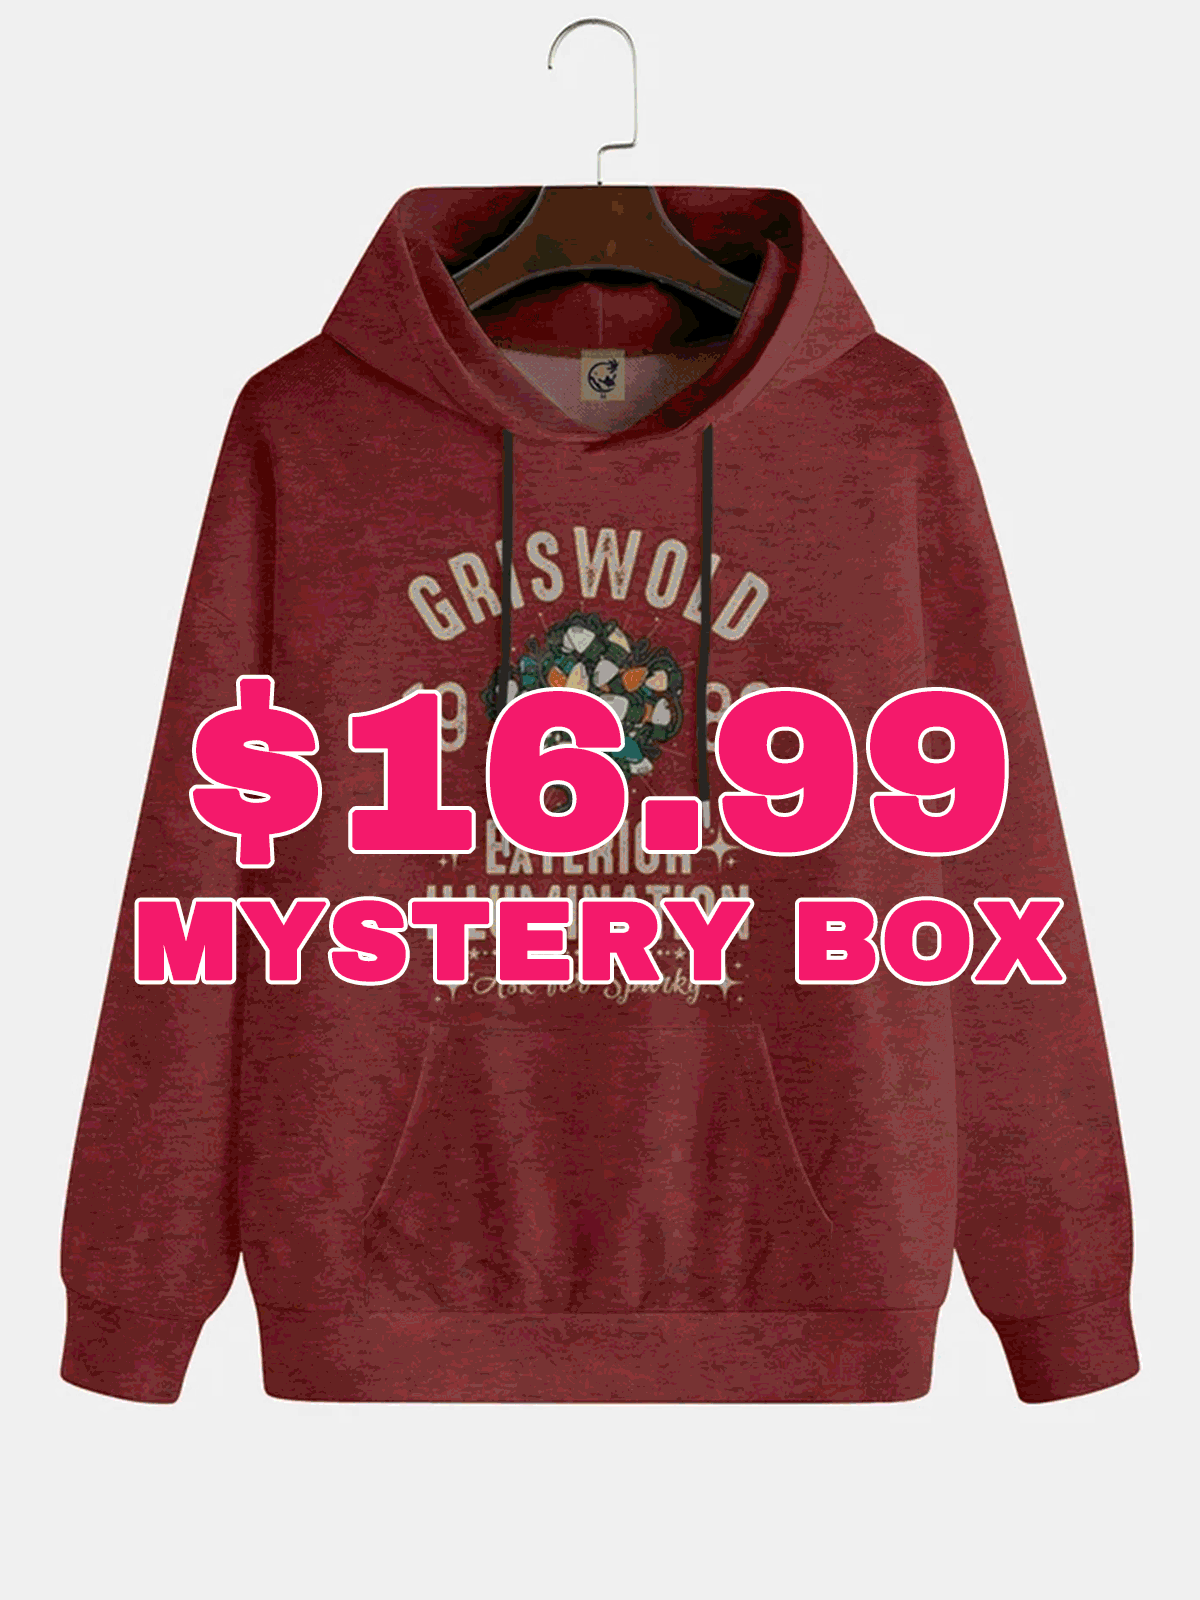 Hardaddy MYSTERY BOX $16.99